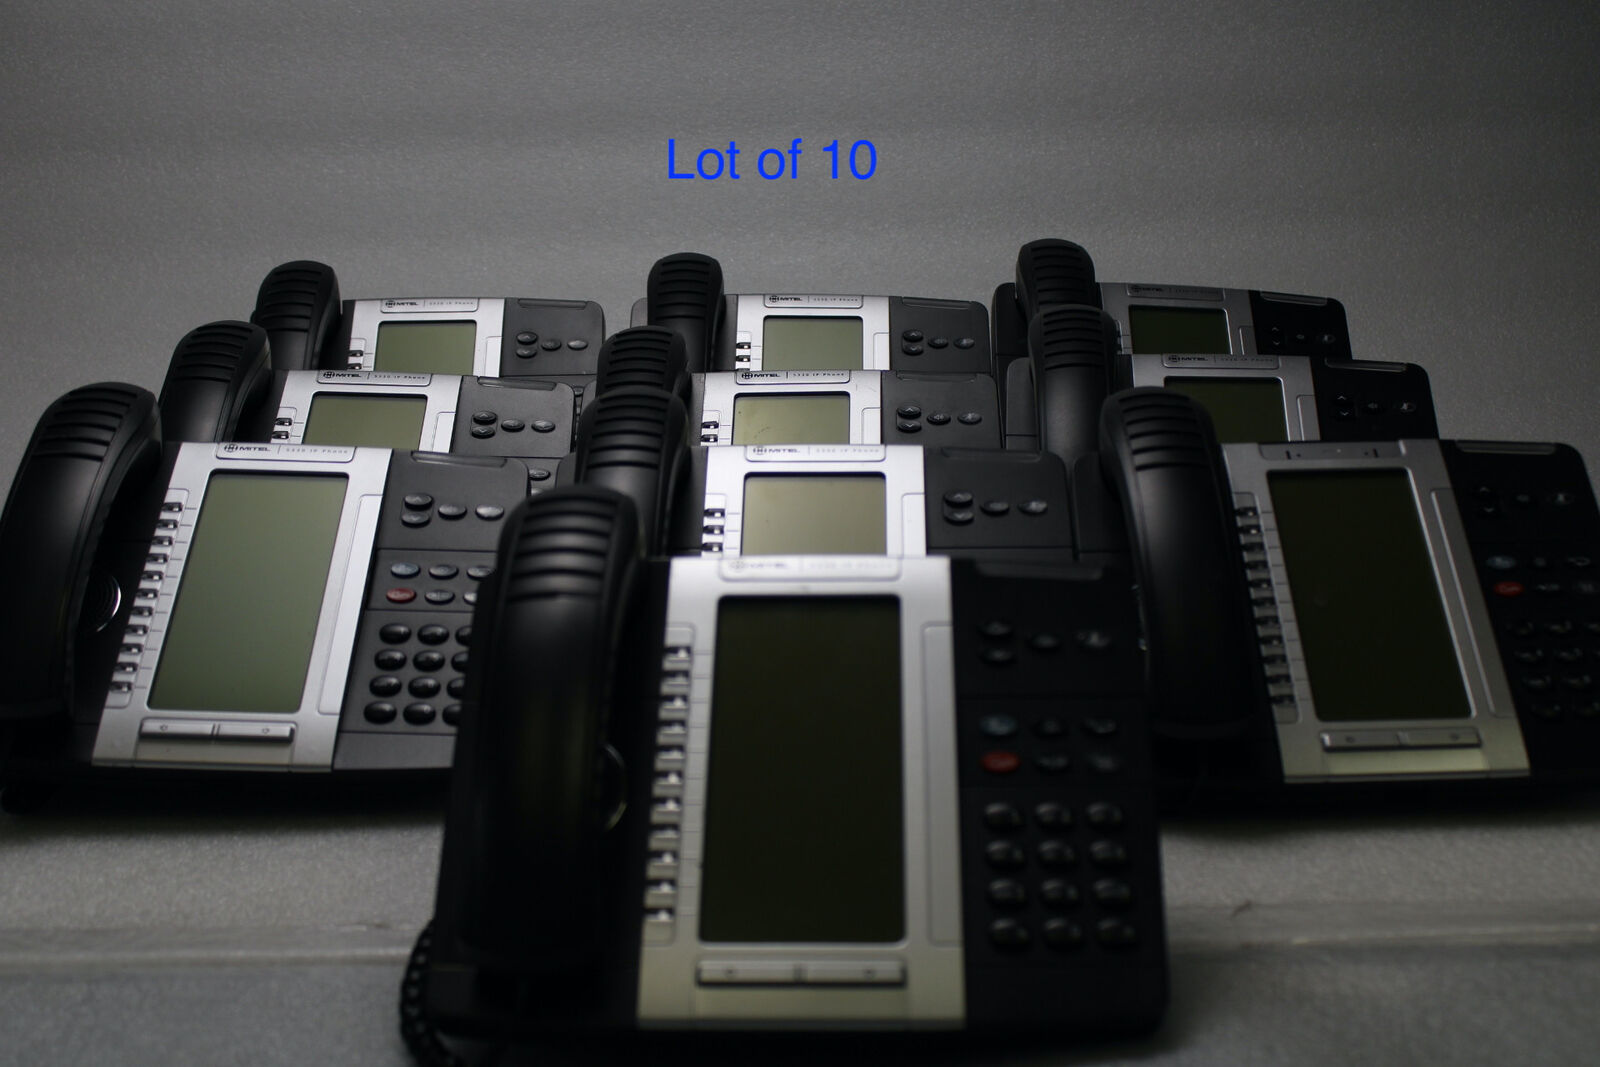 Lot of 10 Mitel 5330 IP VoIP Dual Mode Phones Handsets Gigabit Ethernet Stand